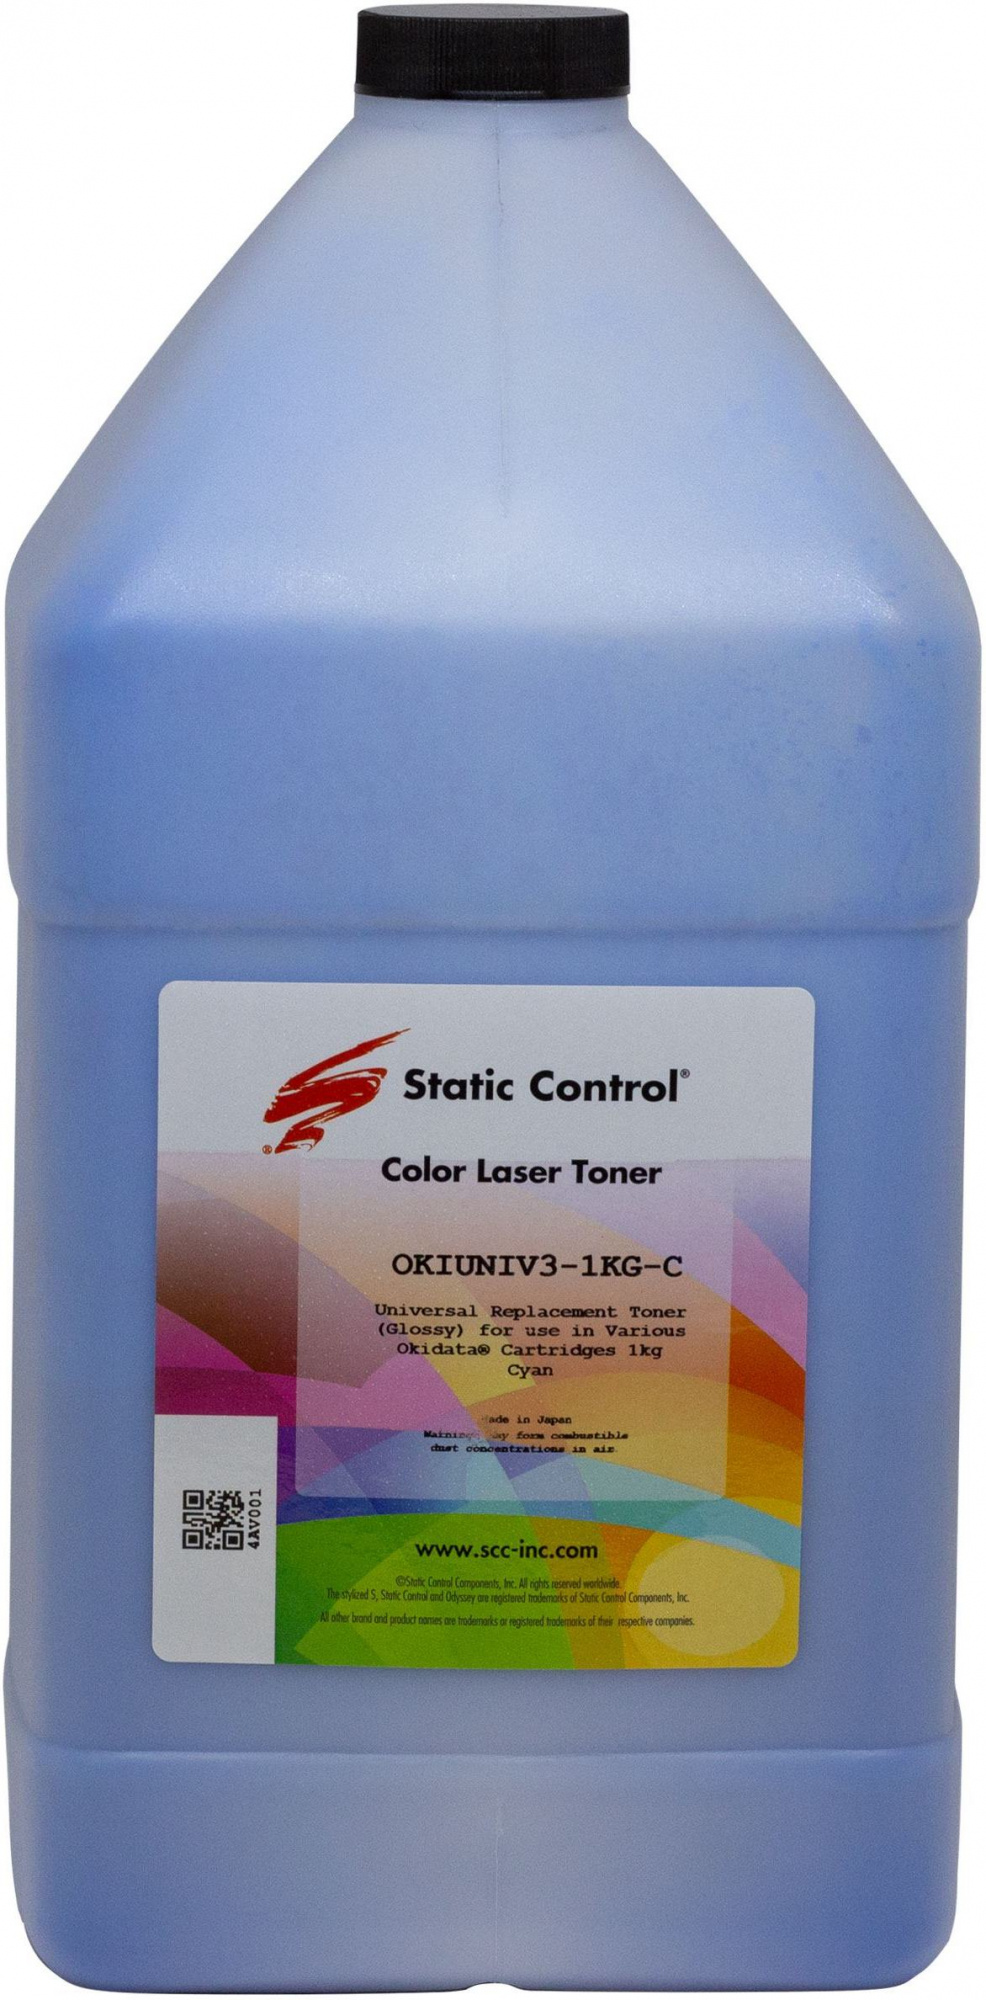 Тонер Static Control OKIUNIV3-1KG-C голубой флакон 1000гр. для принтера Oki C3300N/5500